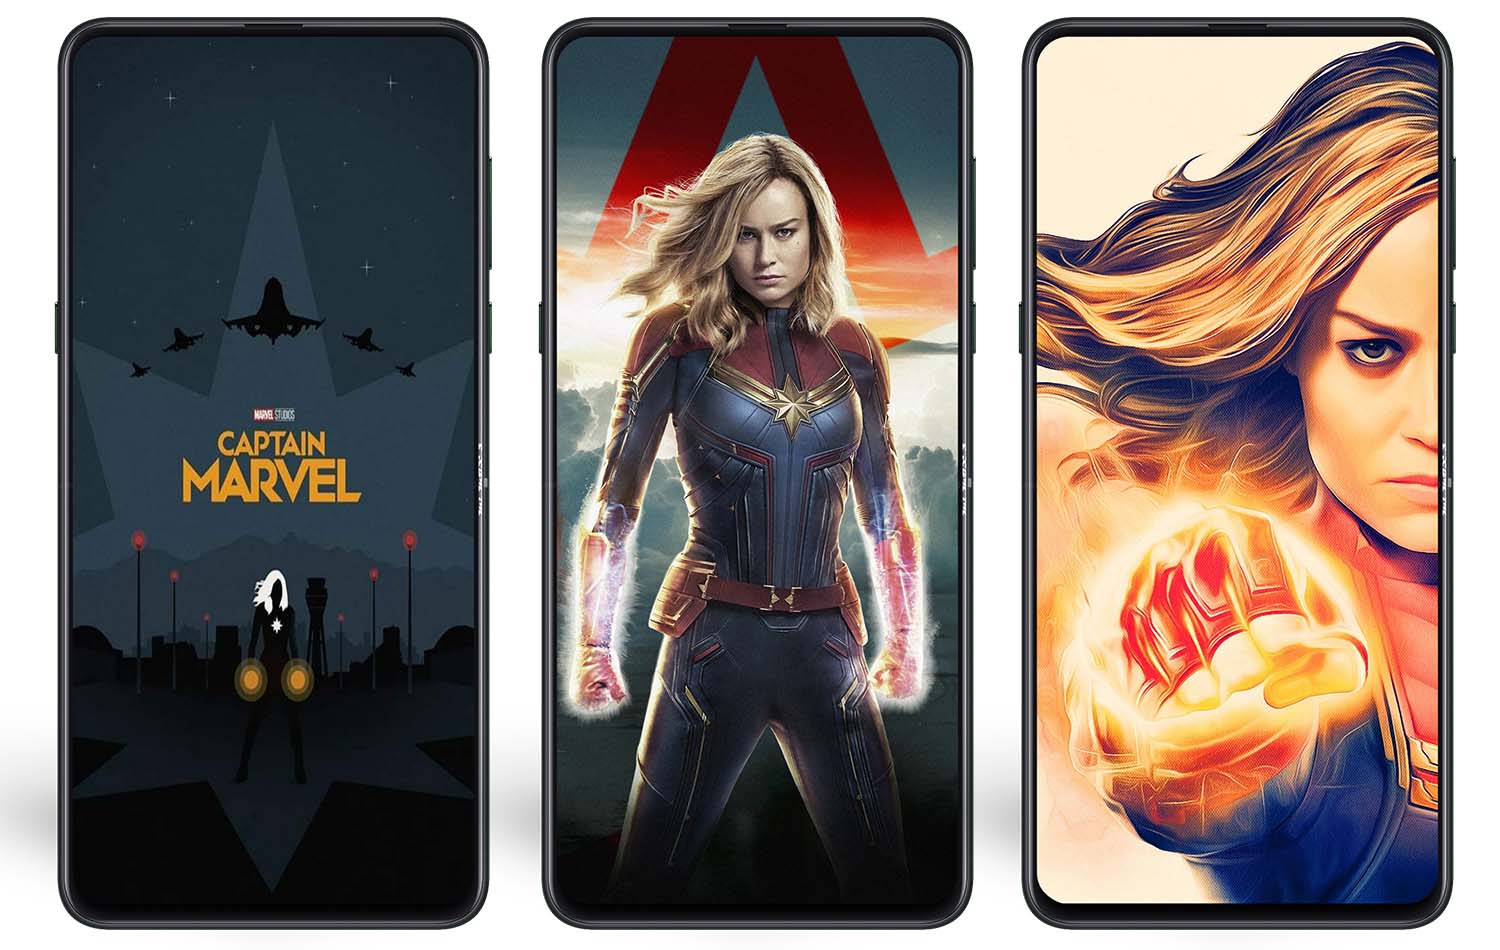 Wallpaper] Fondos de pantalla para amantes de Captain Marvel | HONOR CLUB  (LATIN)